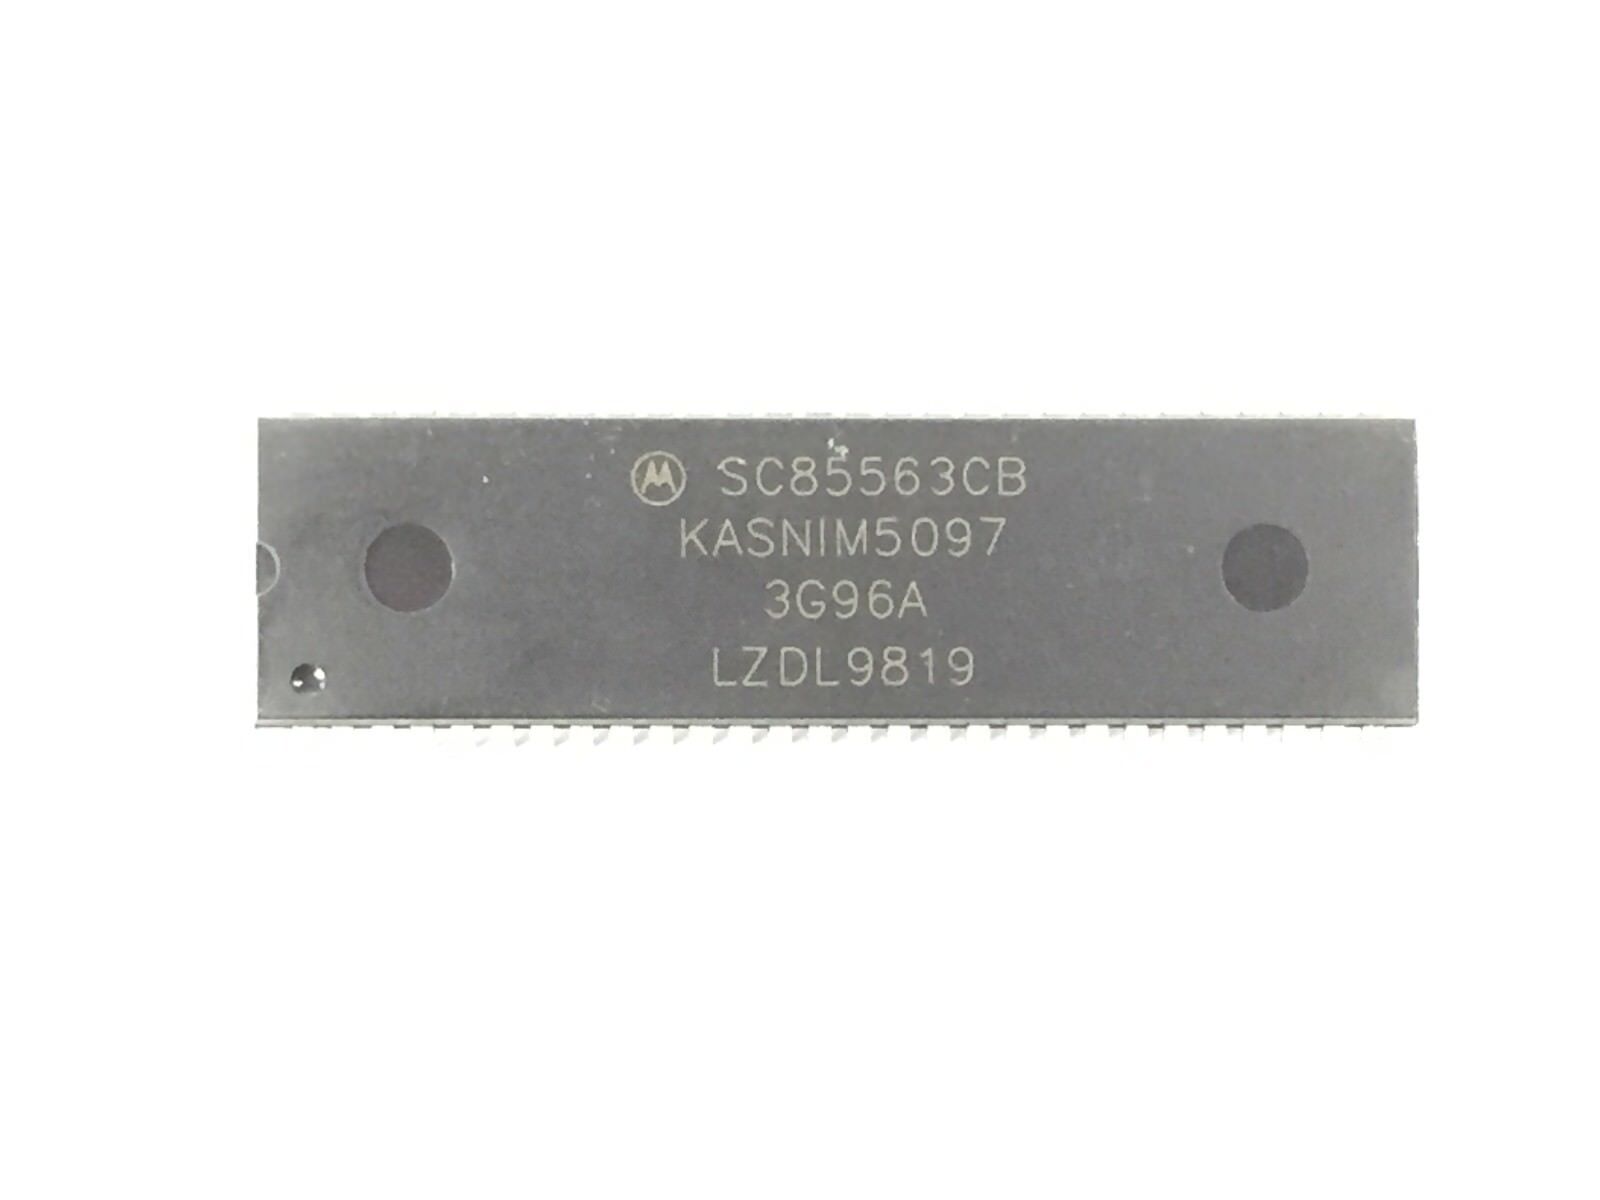 Motorola SC85563CB KASNIM5097 3G96A LZDL9819 Lot of 9